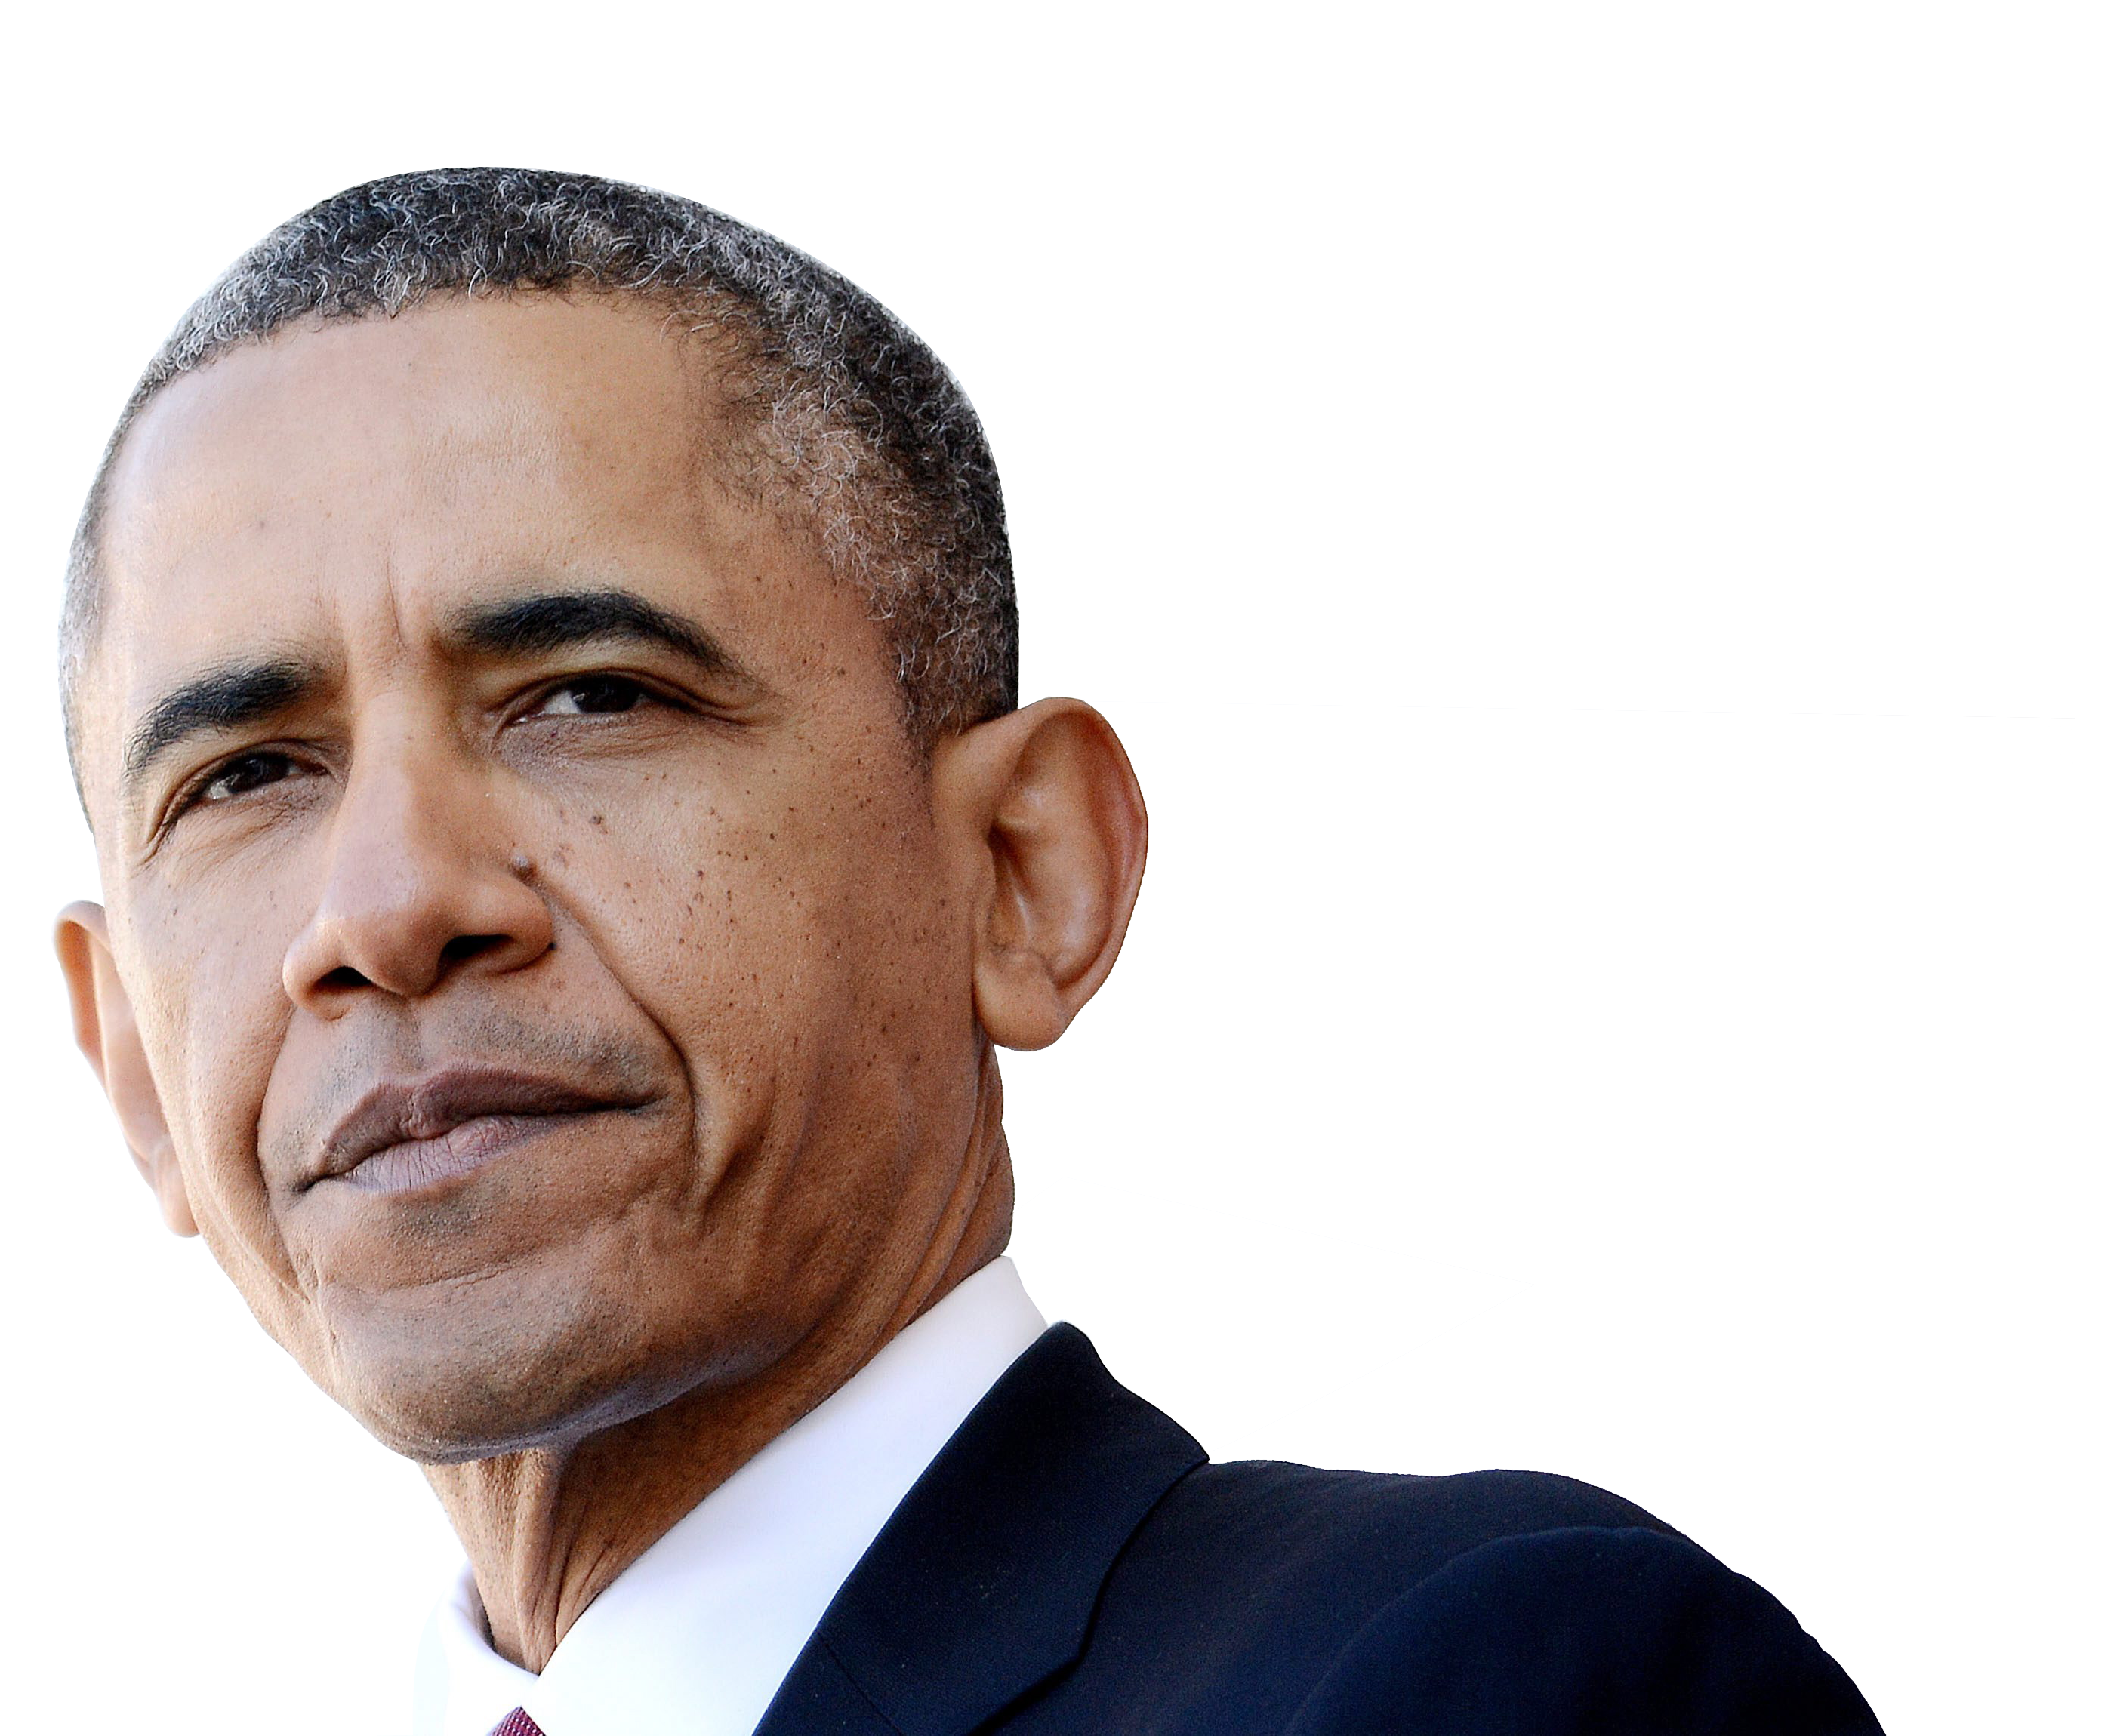 Barack Obama Portrait